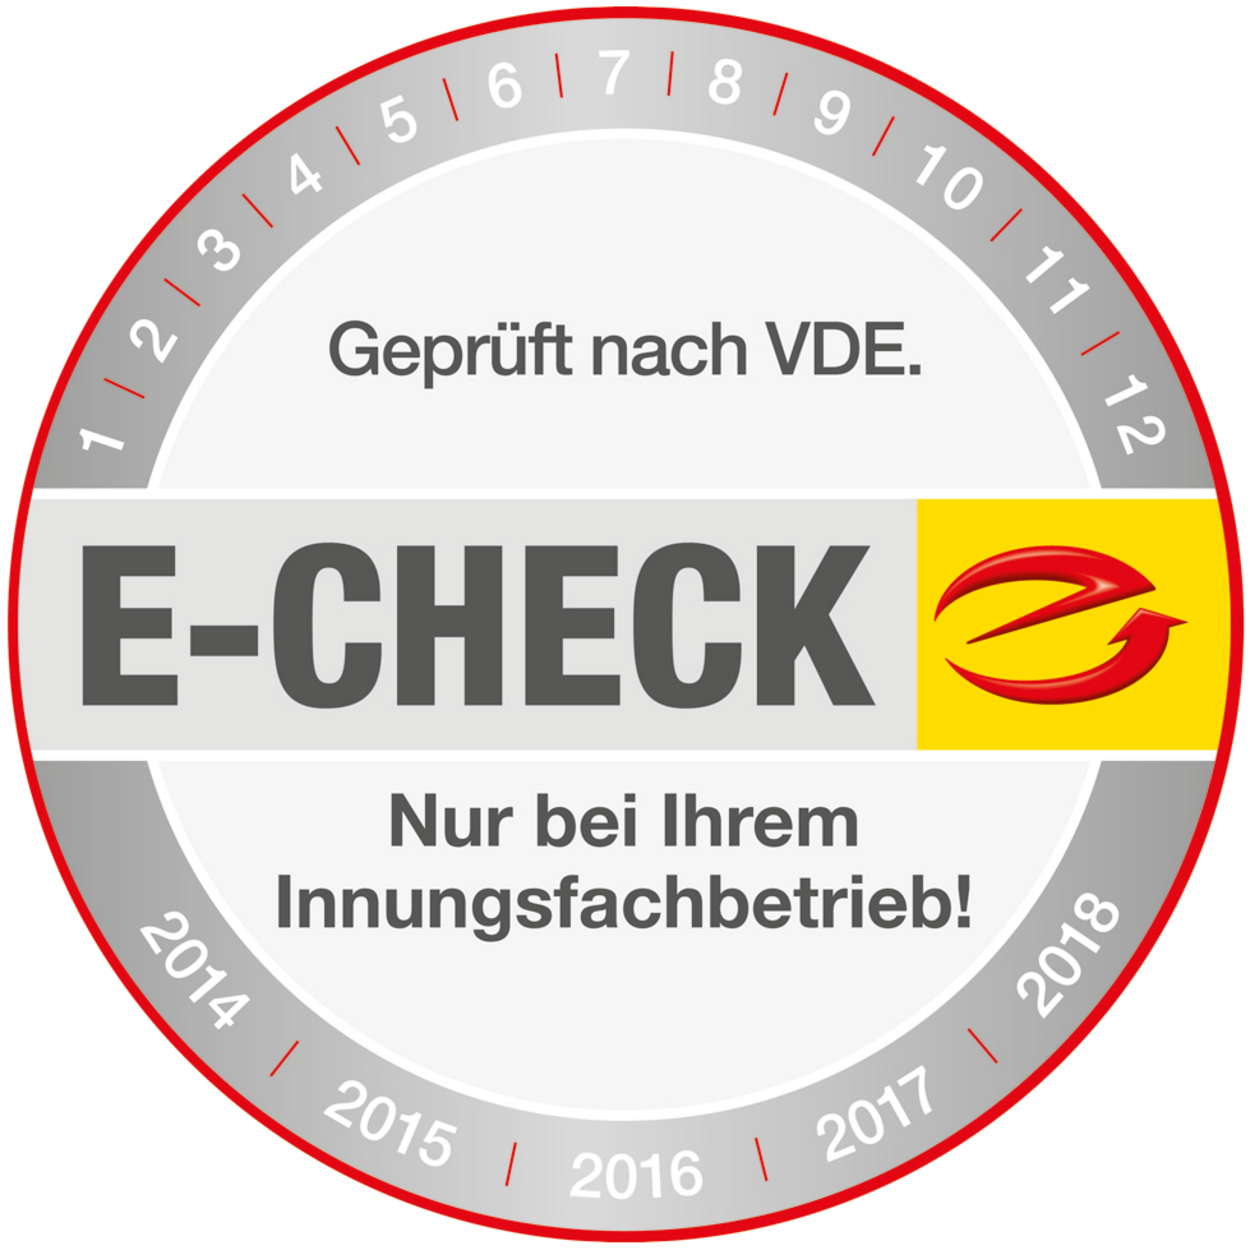 Der E-Check bei Elektro Brehm GmbH in Alzenau-Hörstein